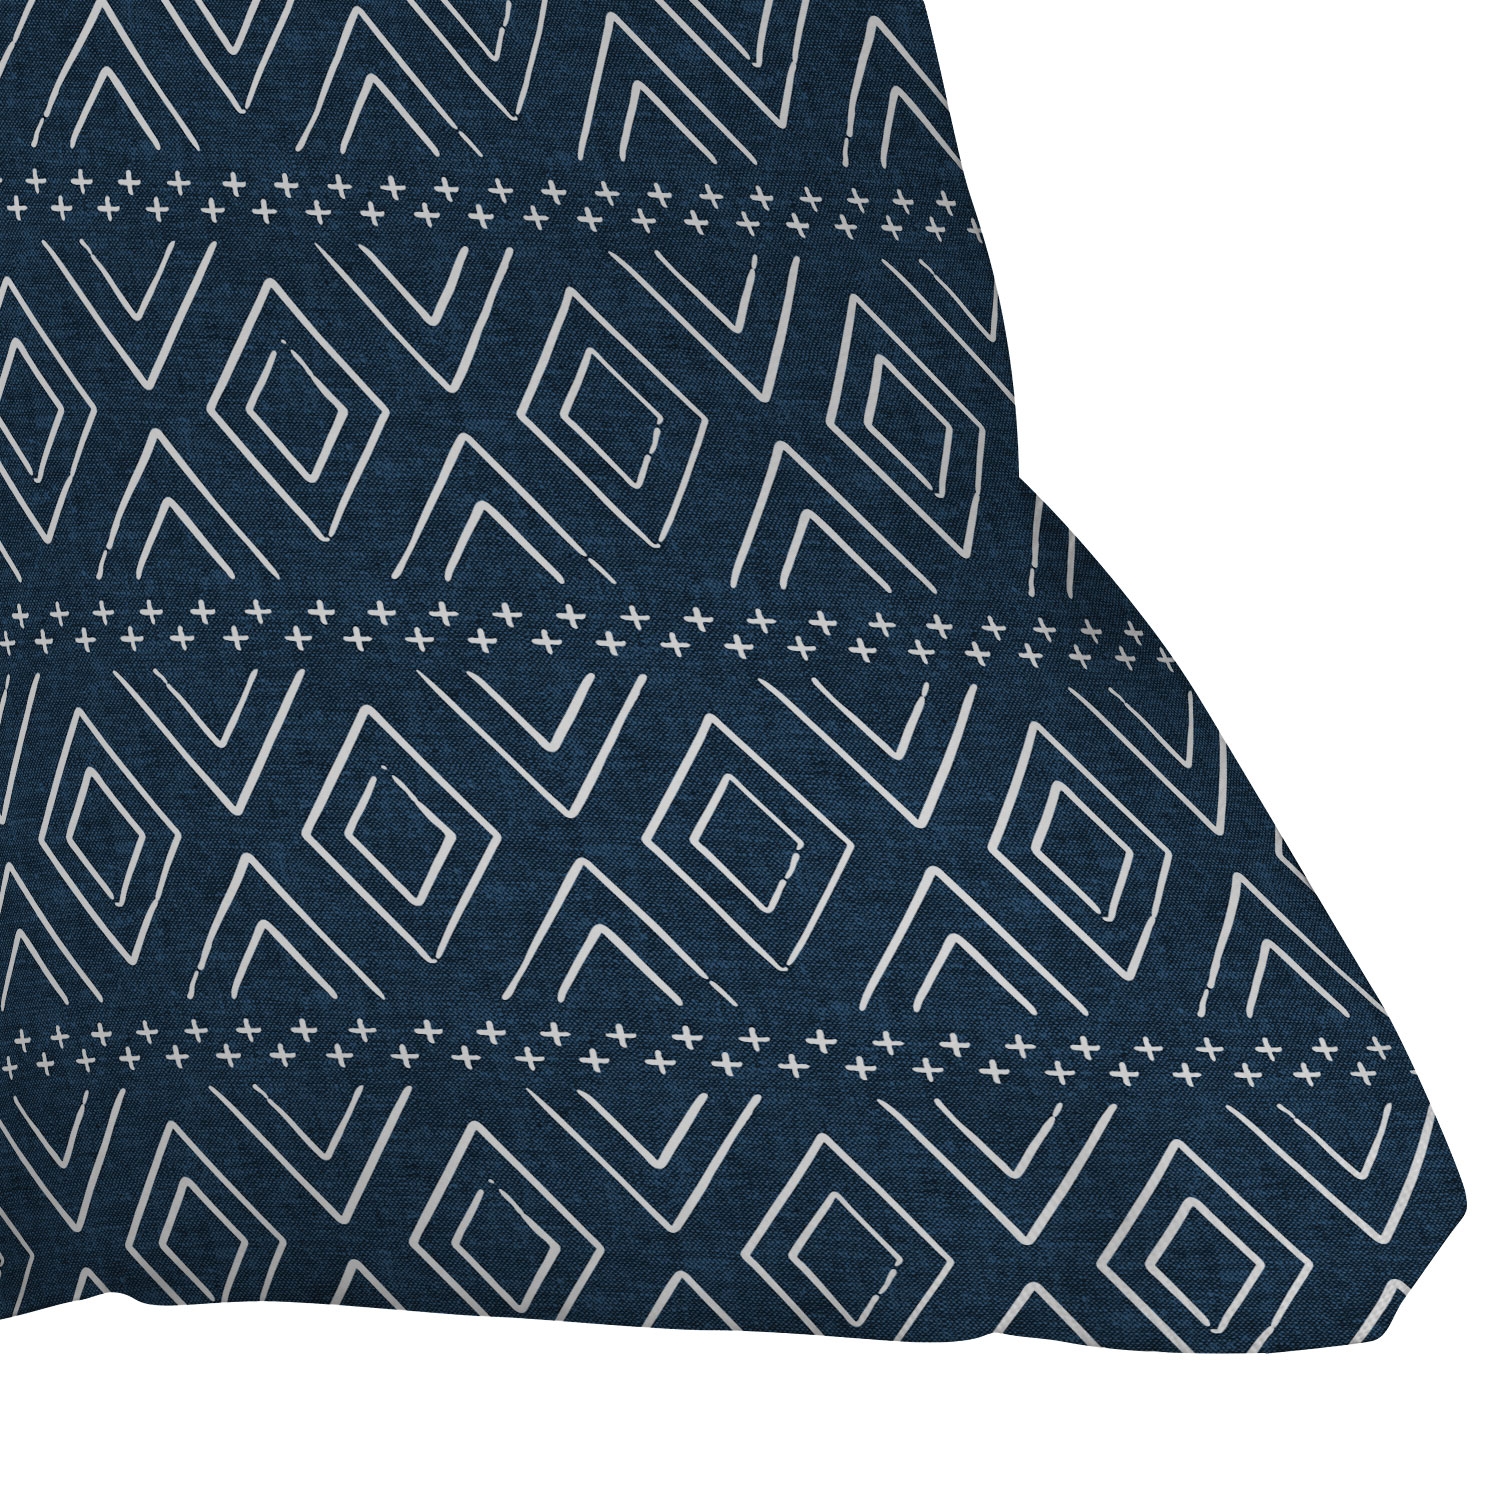 Farmhouse Diamonds Navy by Little Arrow Design Co - Outdoor Throw Pillow 16" x 16" - Image 2